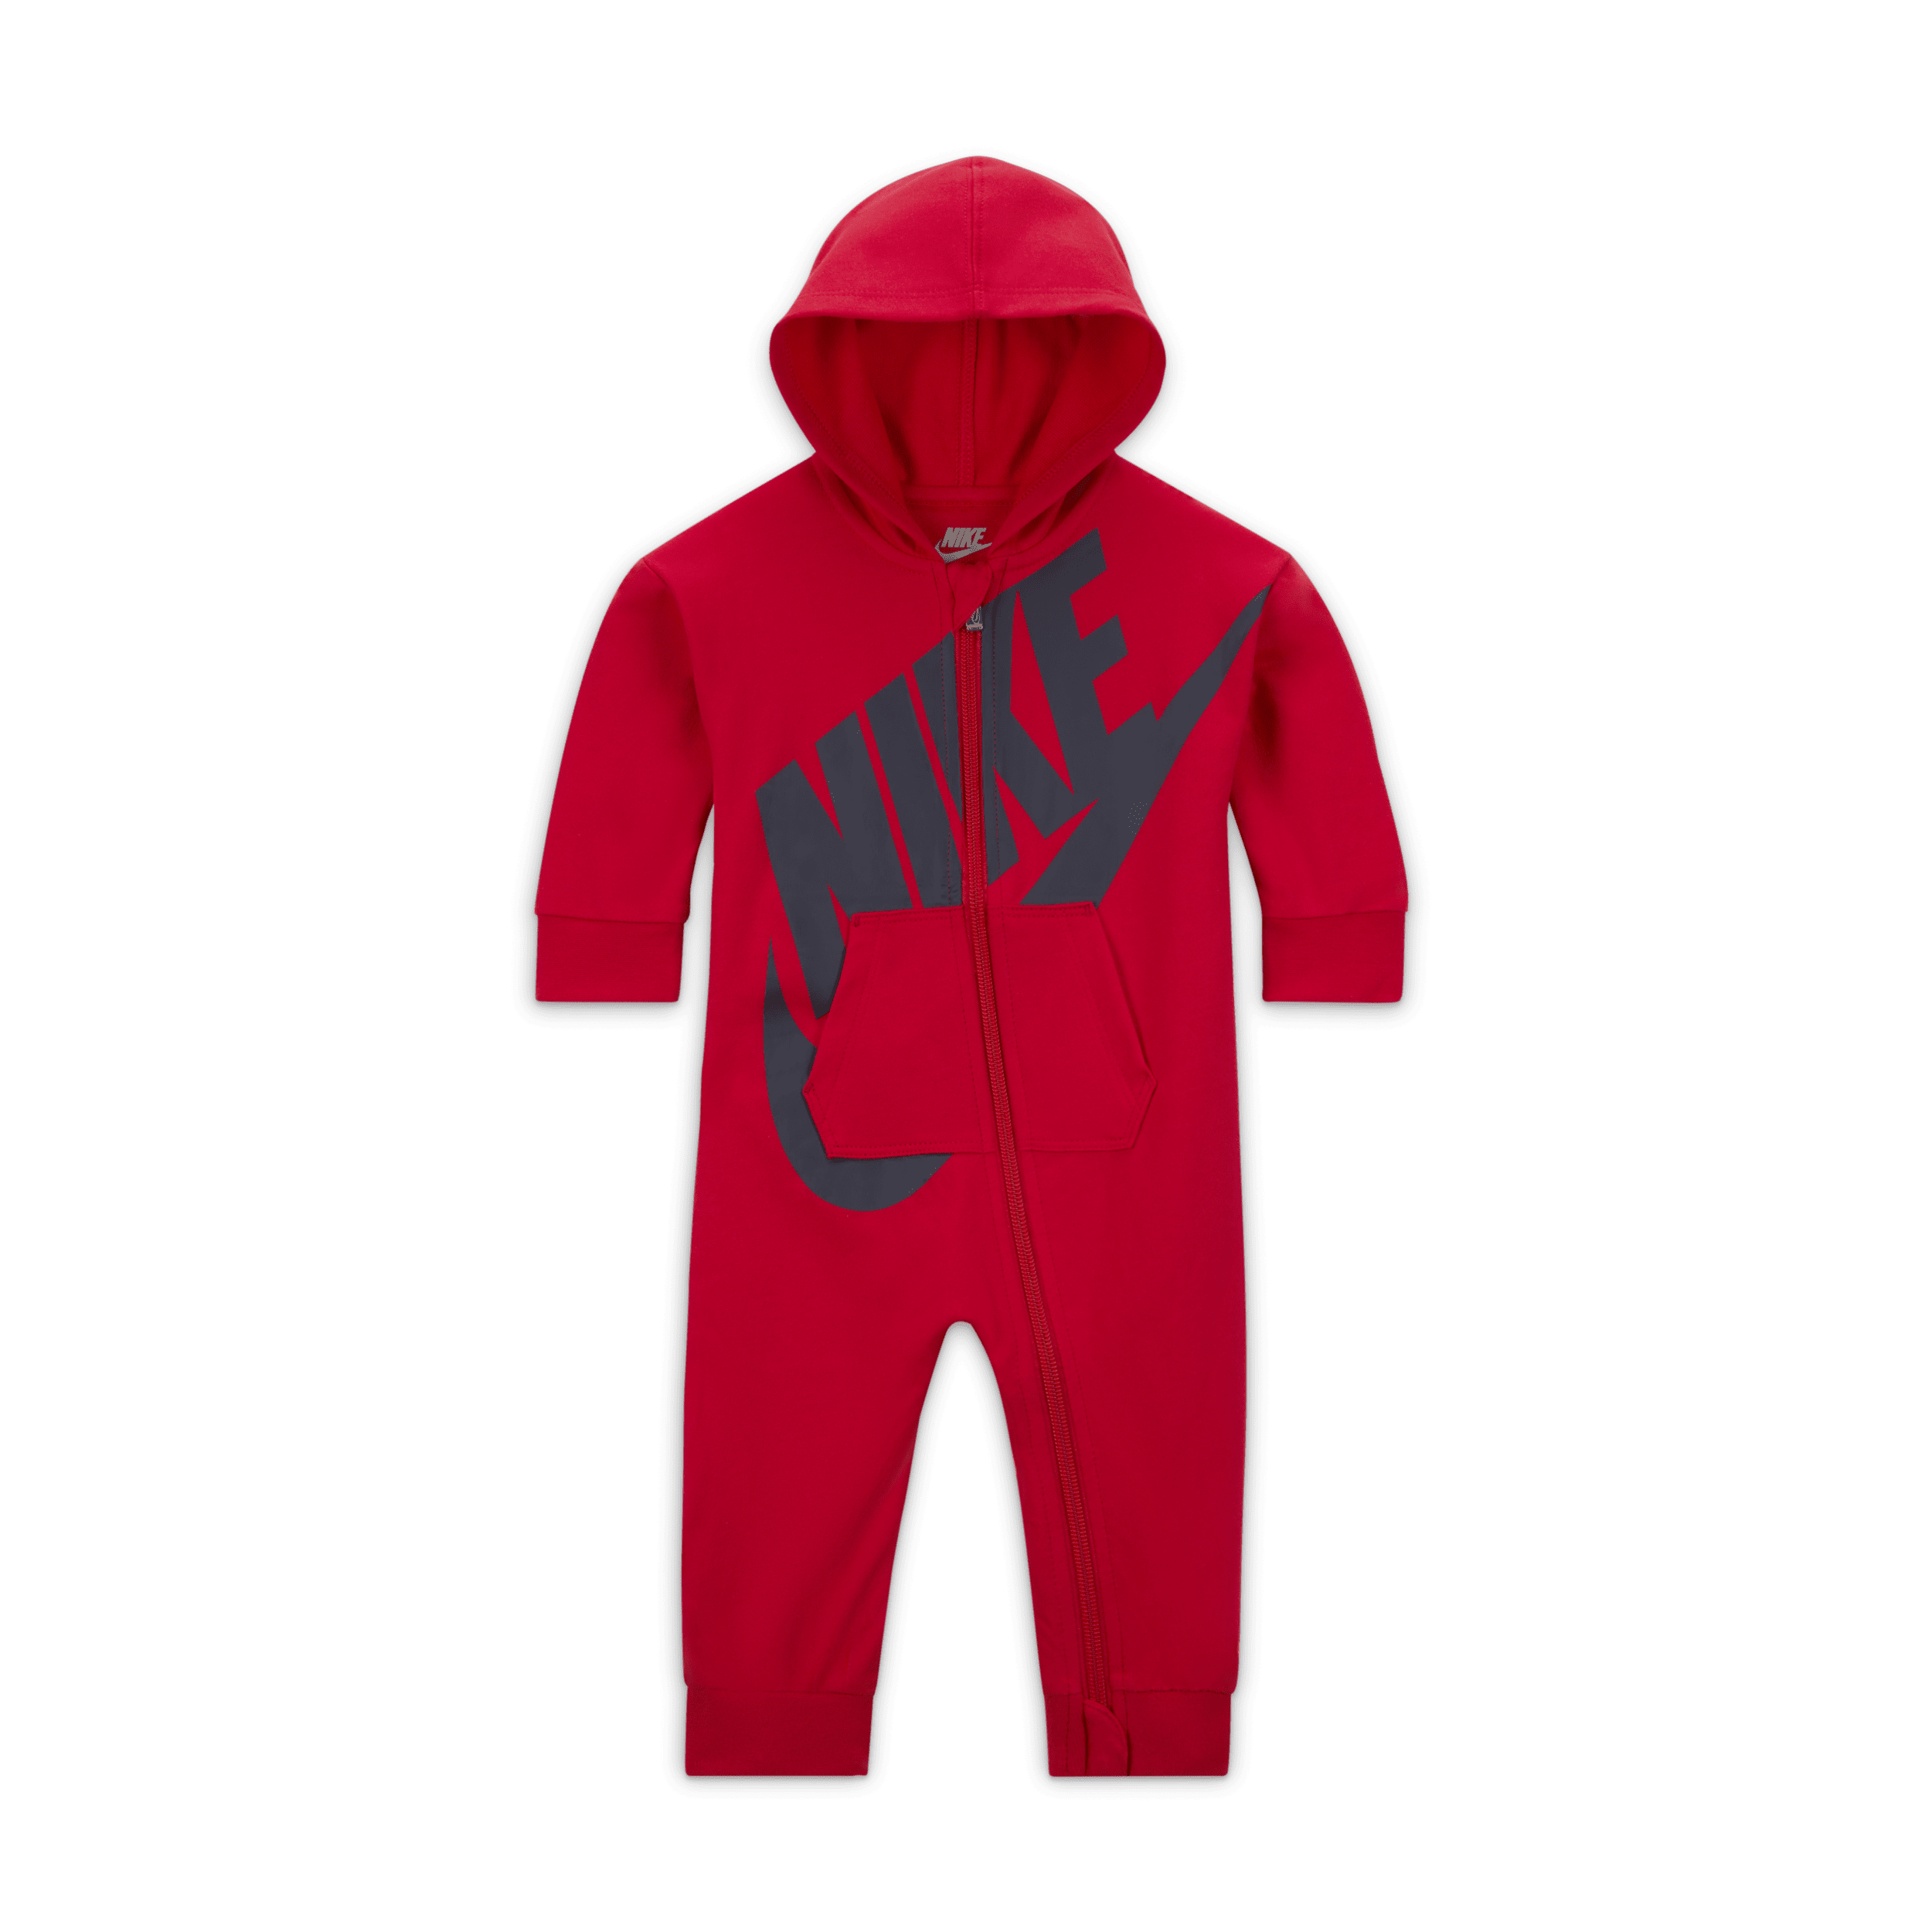 Nike Mono con cremallera completa - Bebé (0-9 M) - Rojo